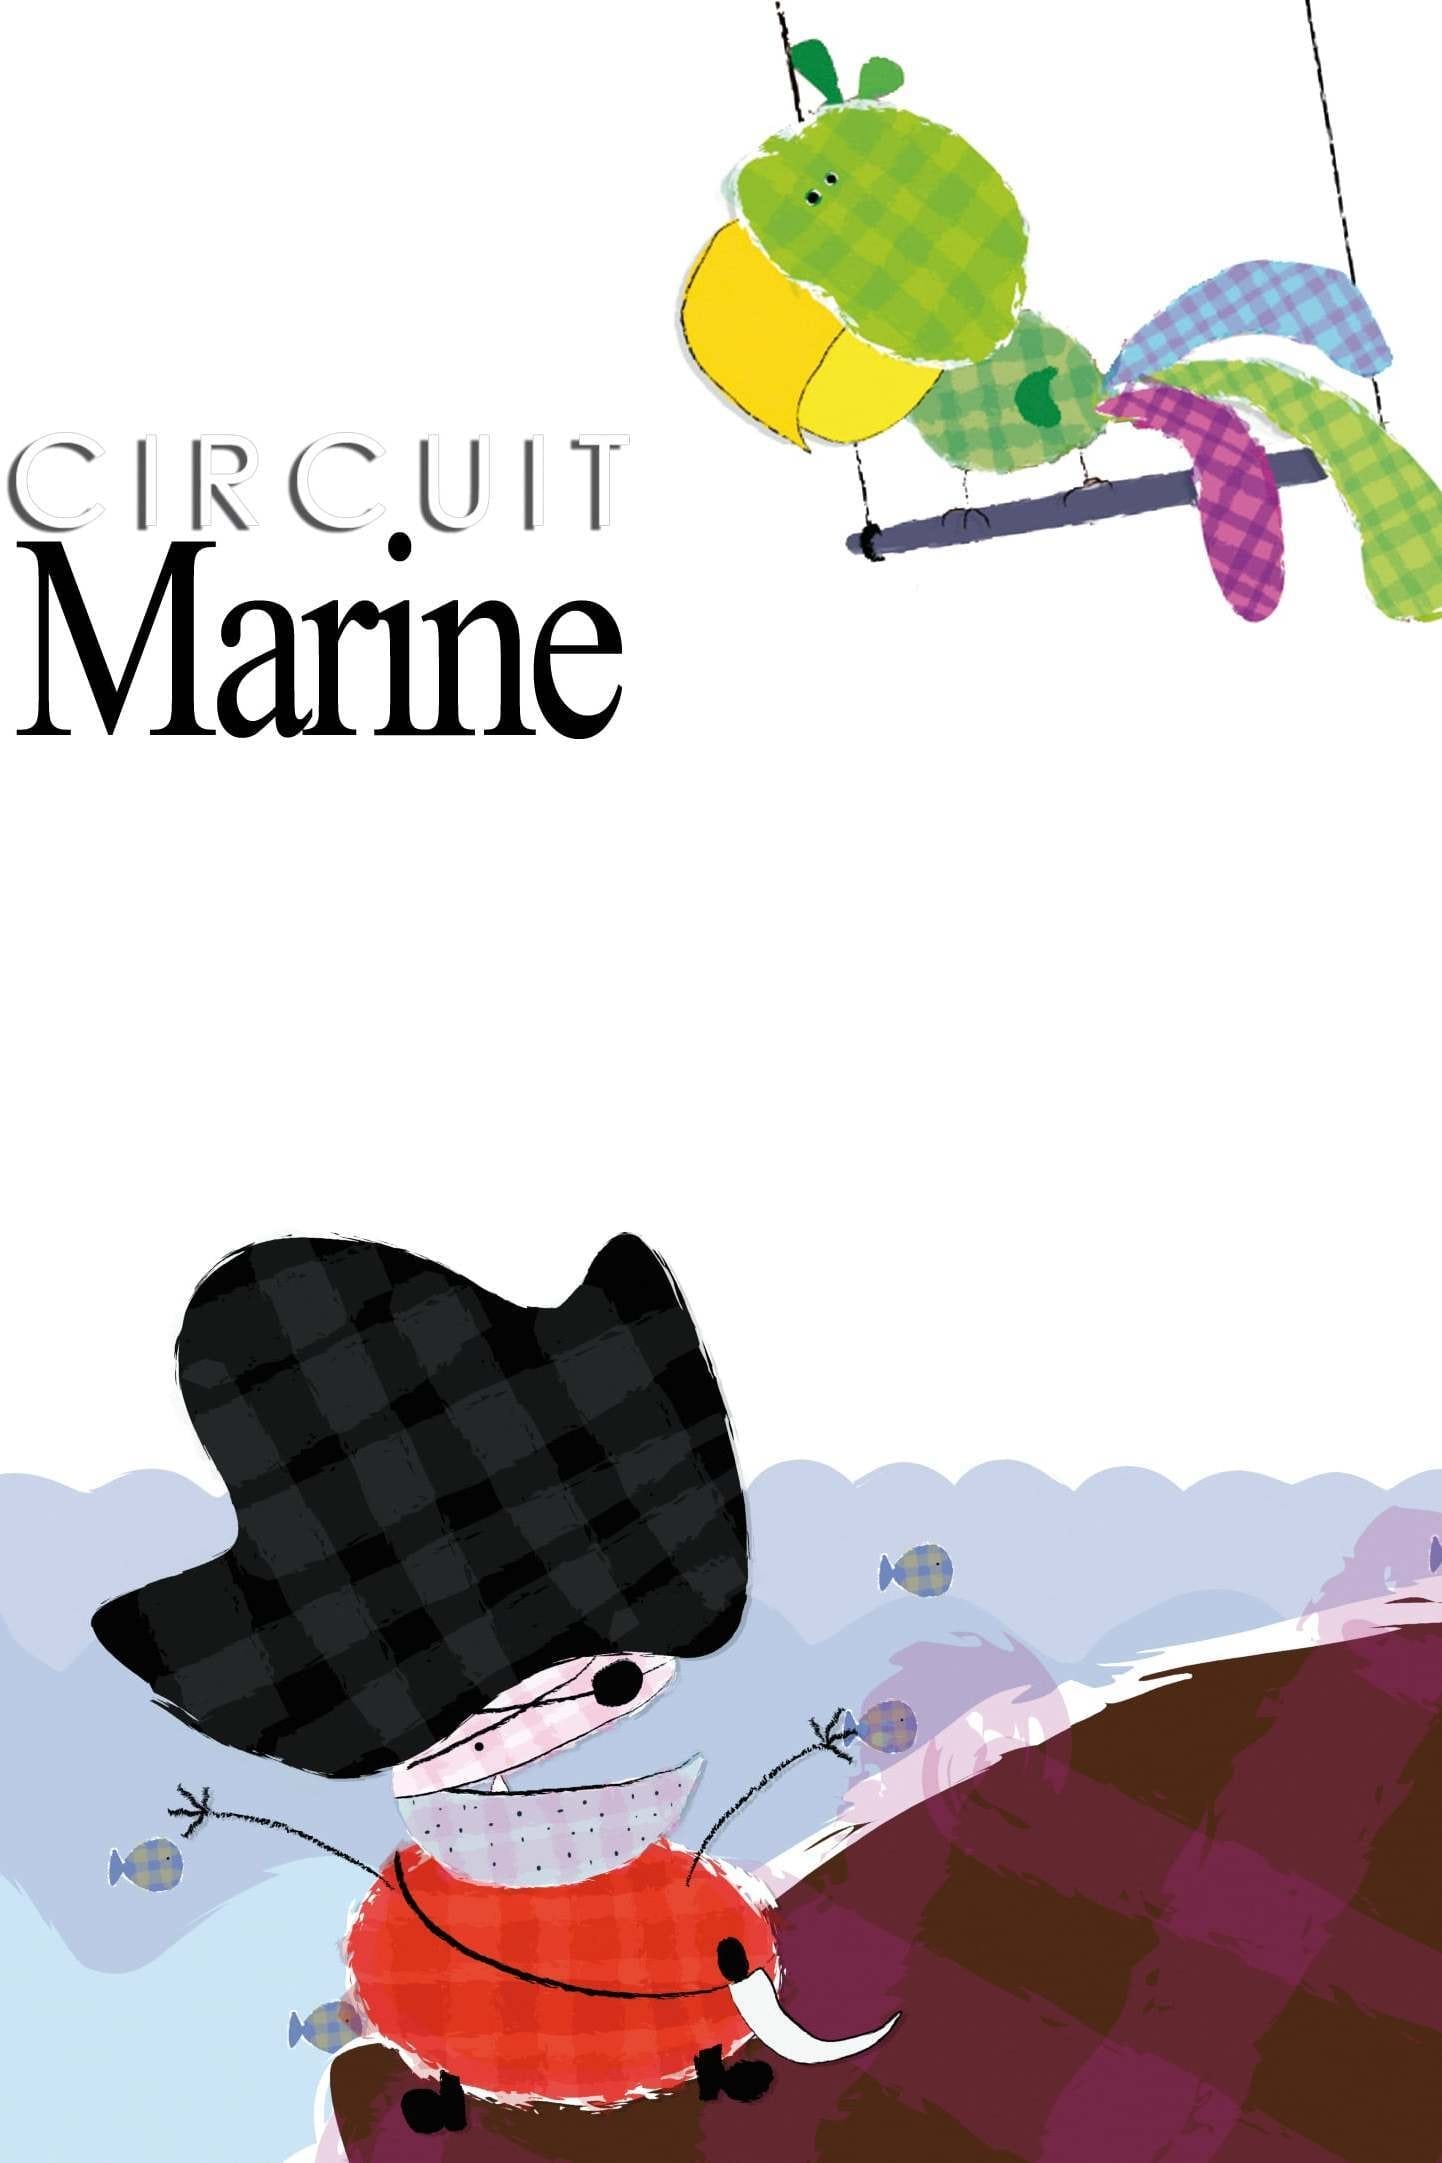 Circuit marine